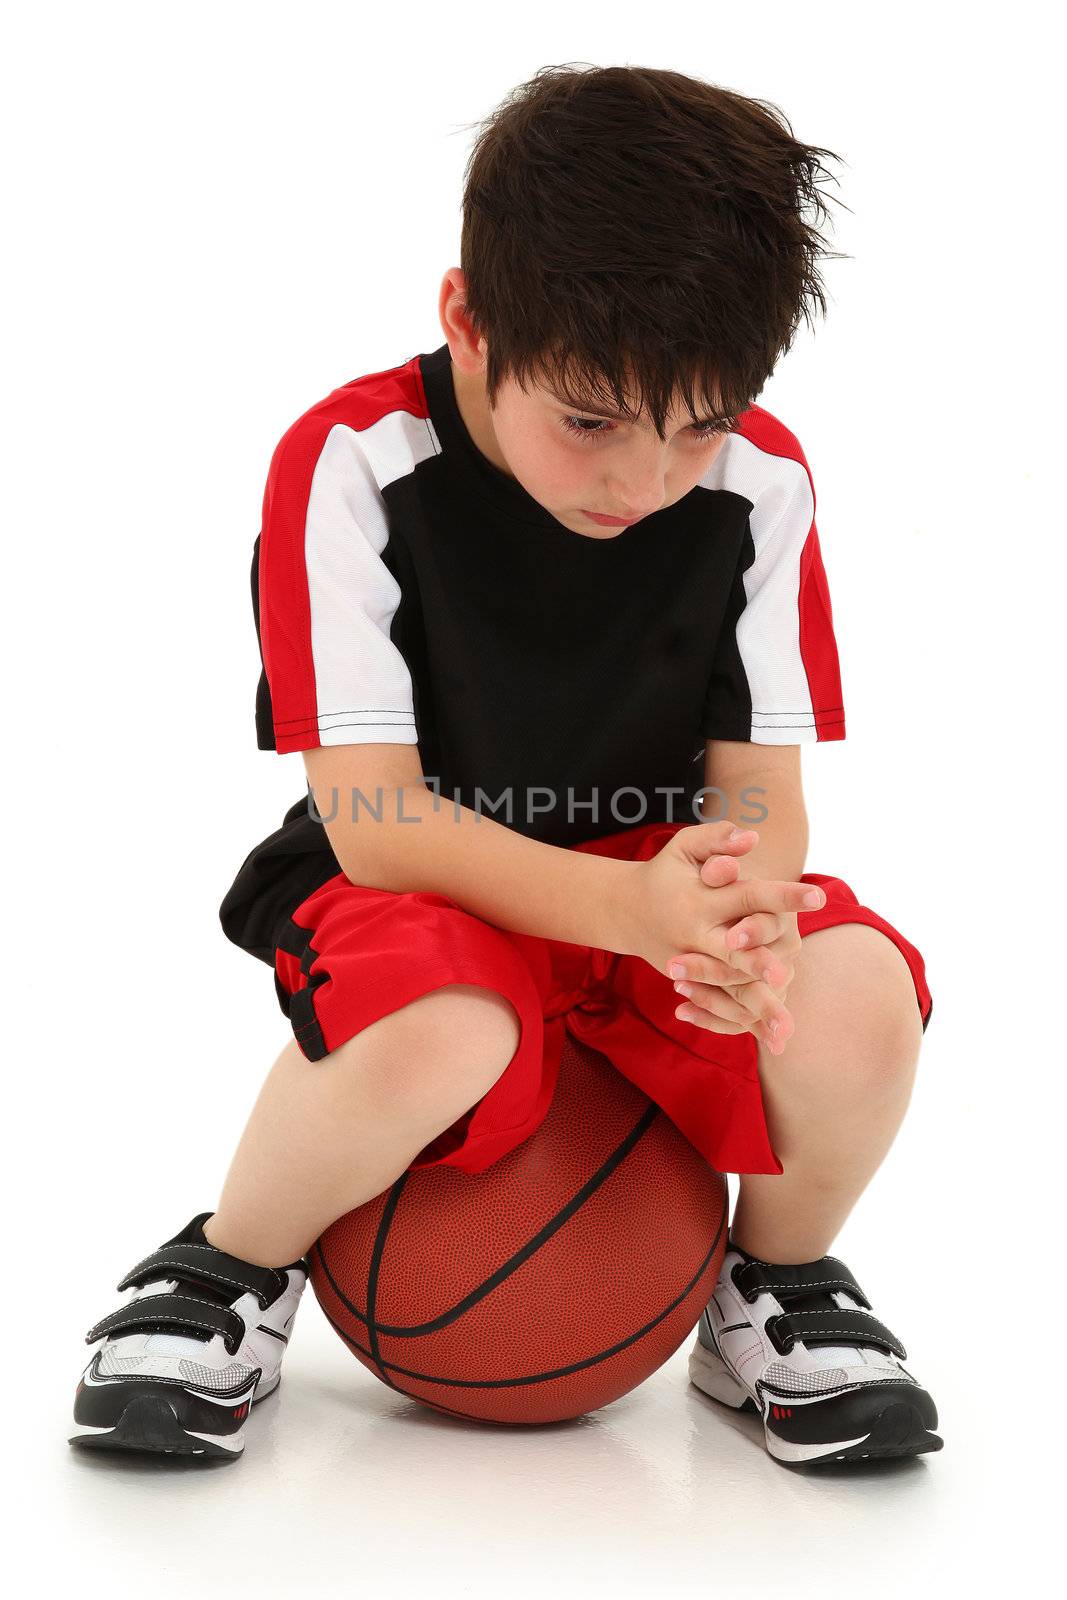 Sad elementary school boy sitting on basketball sad crying expression on face.